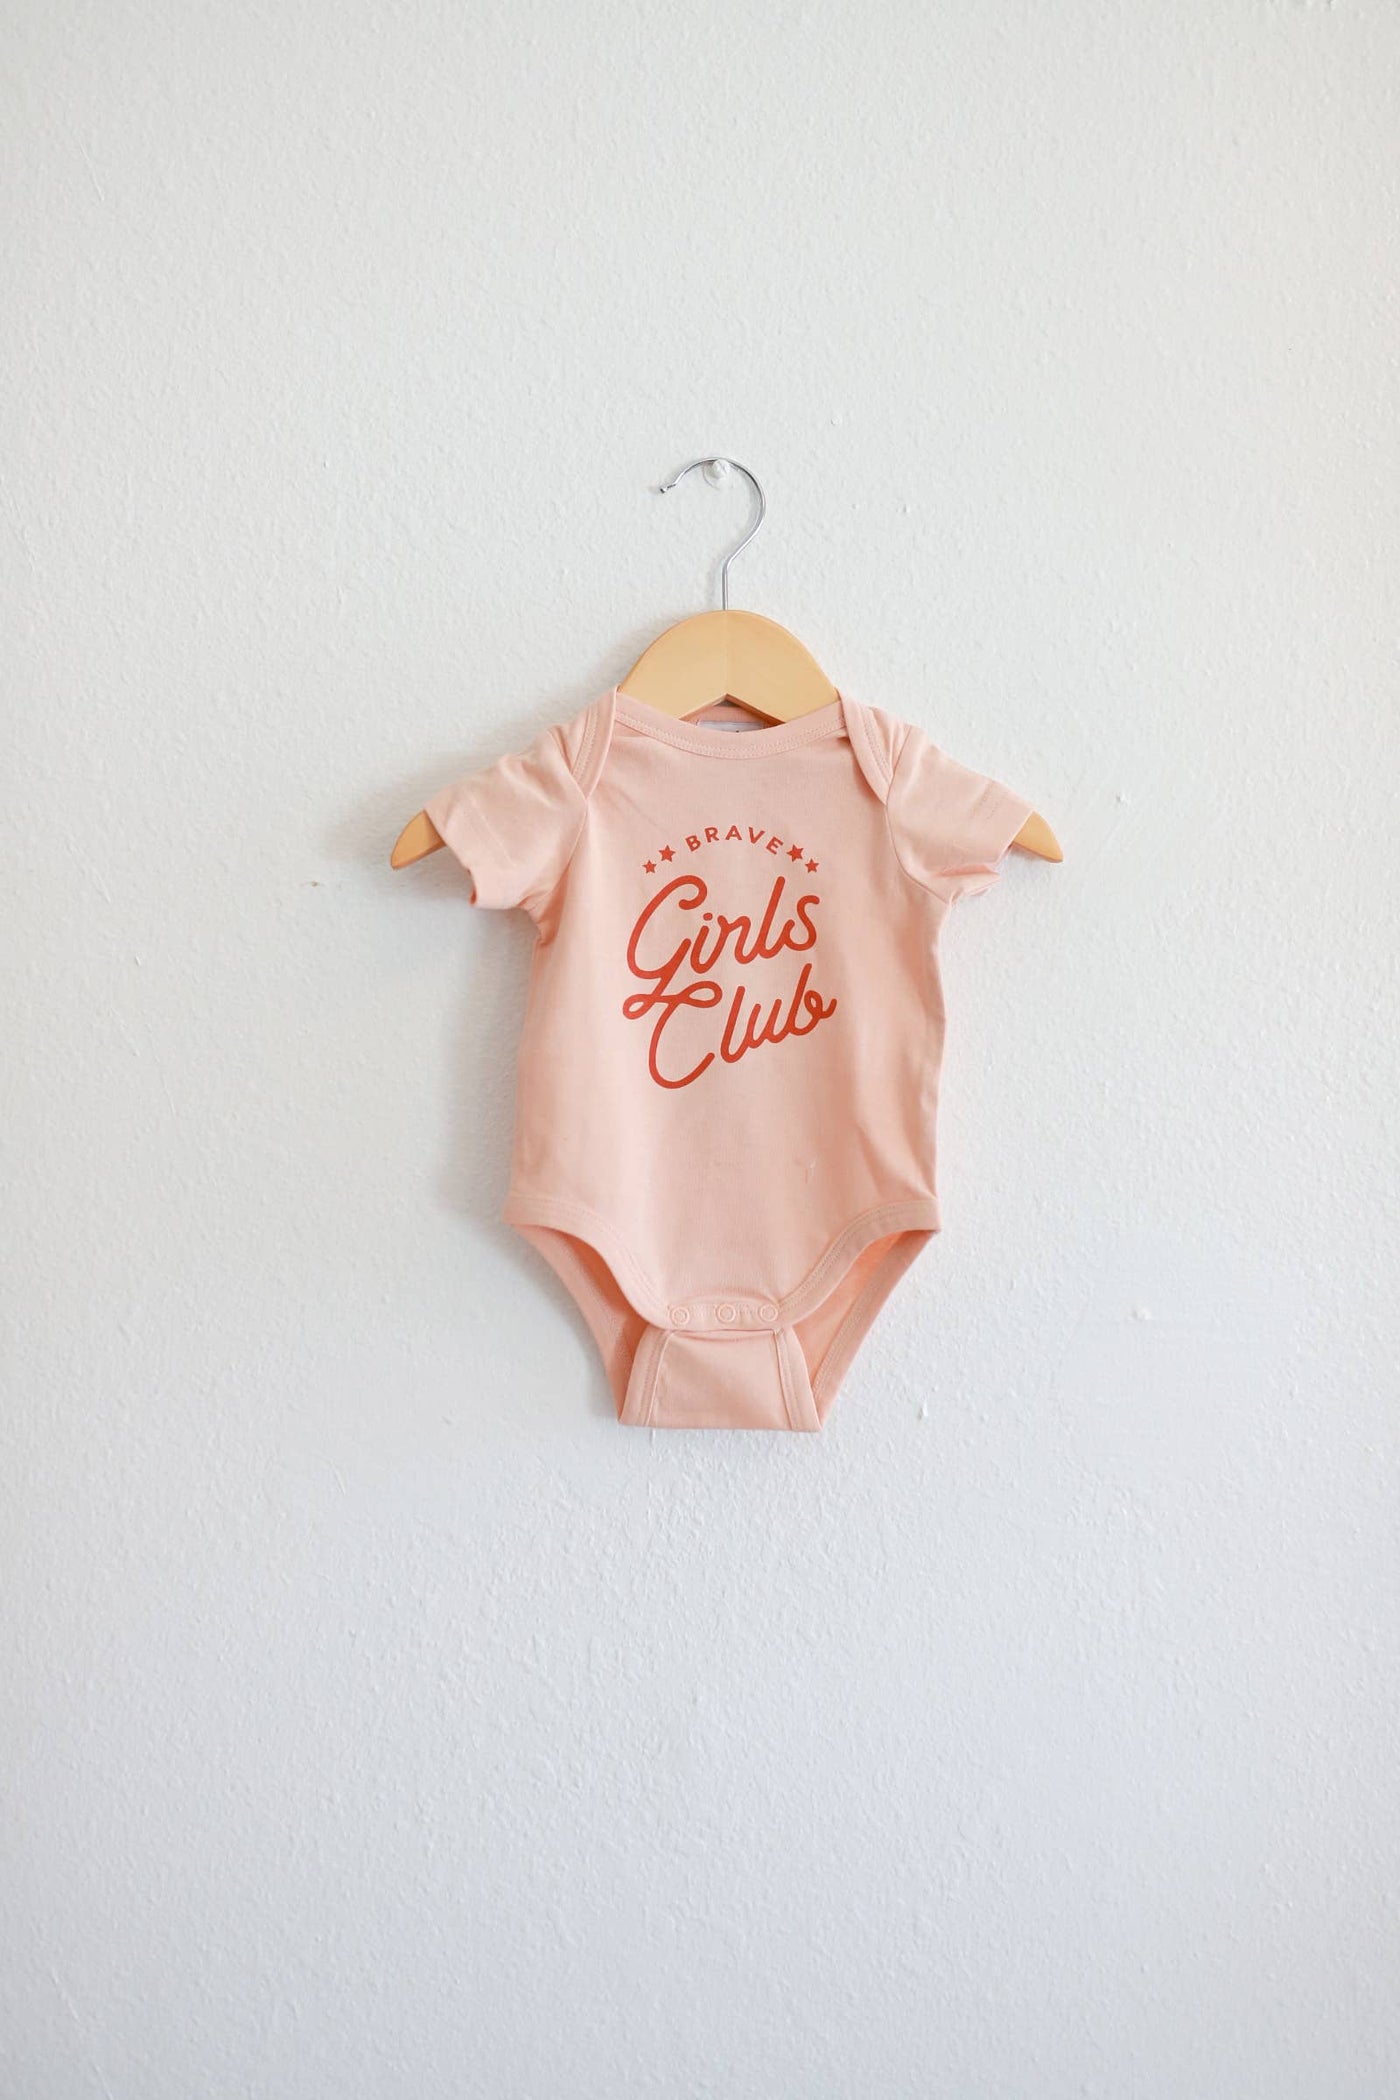 Brave Girls Club Baby Onesie, Baby Bodysuit, Baby Gift - 6 Month